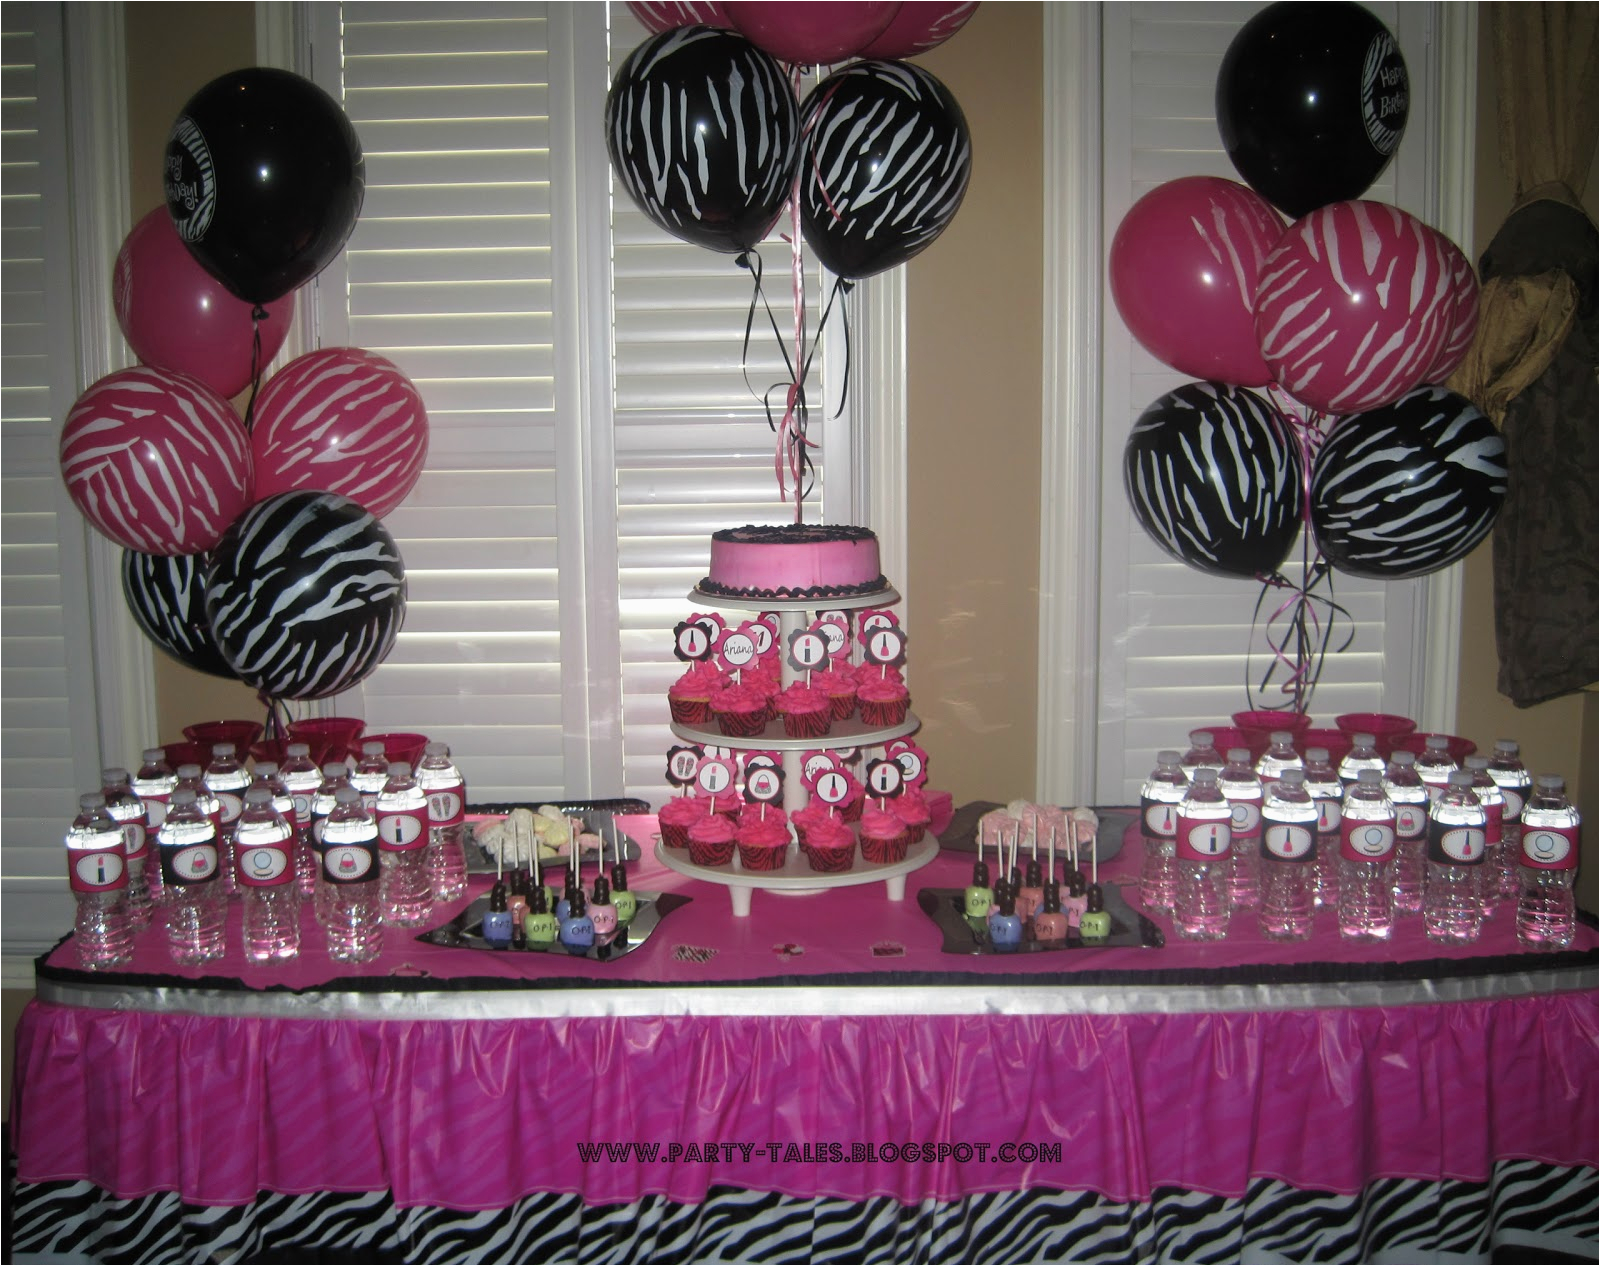 Zebra Print Birthday Party Decorations Party Tales Birthday Party Zebra Print and Hot Pink